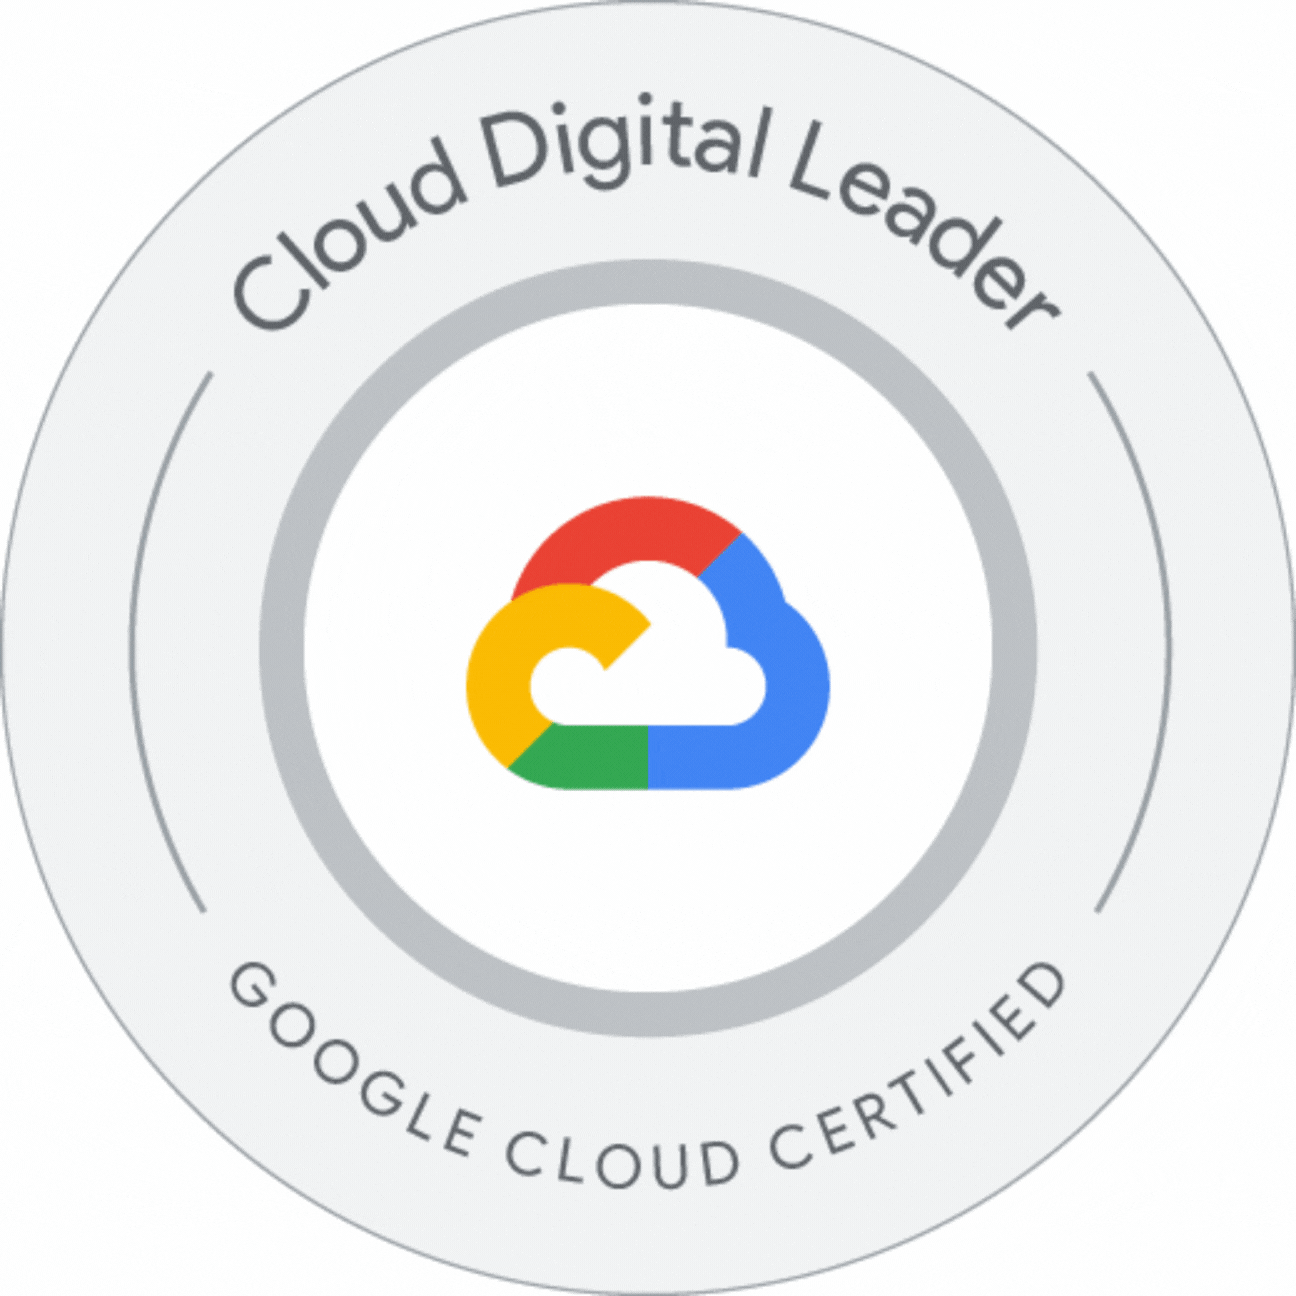 Gif badges certifications Google